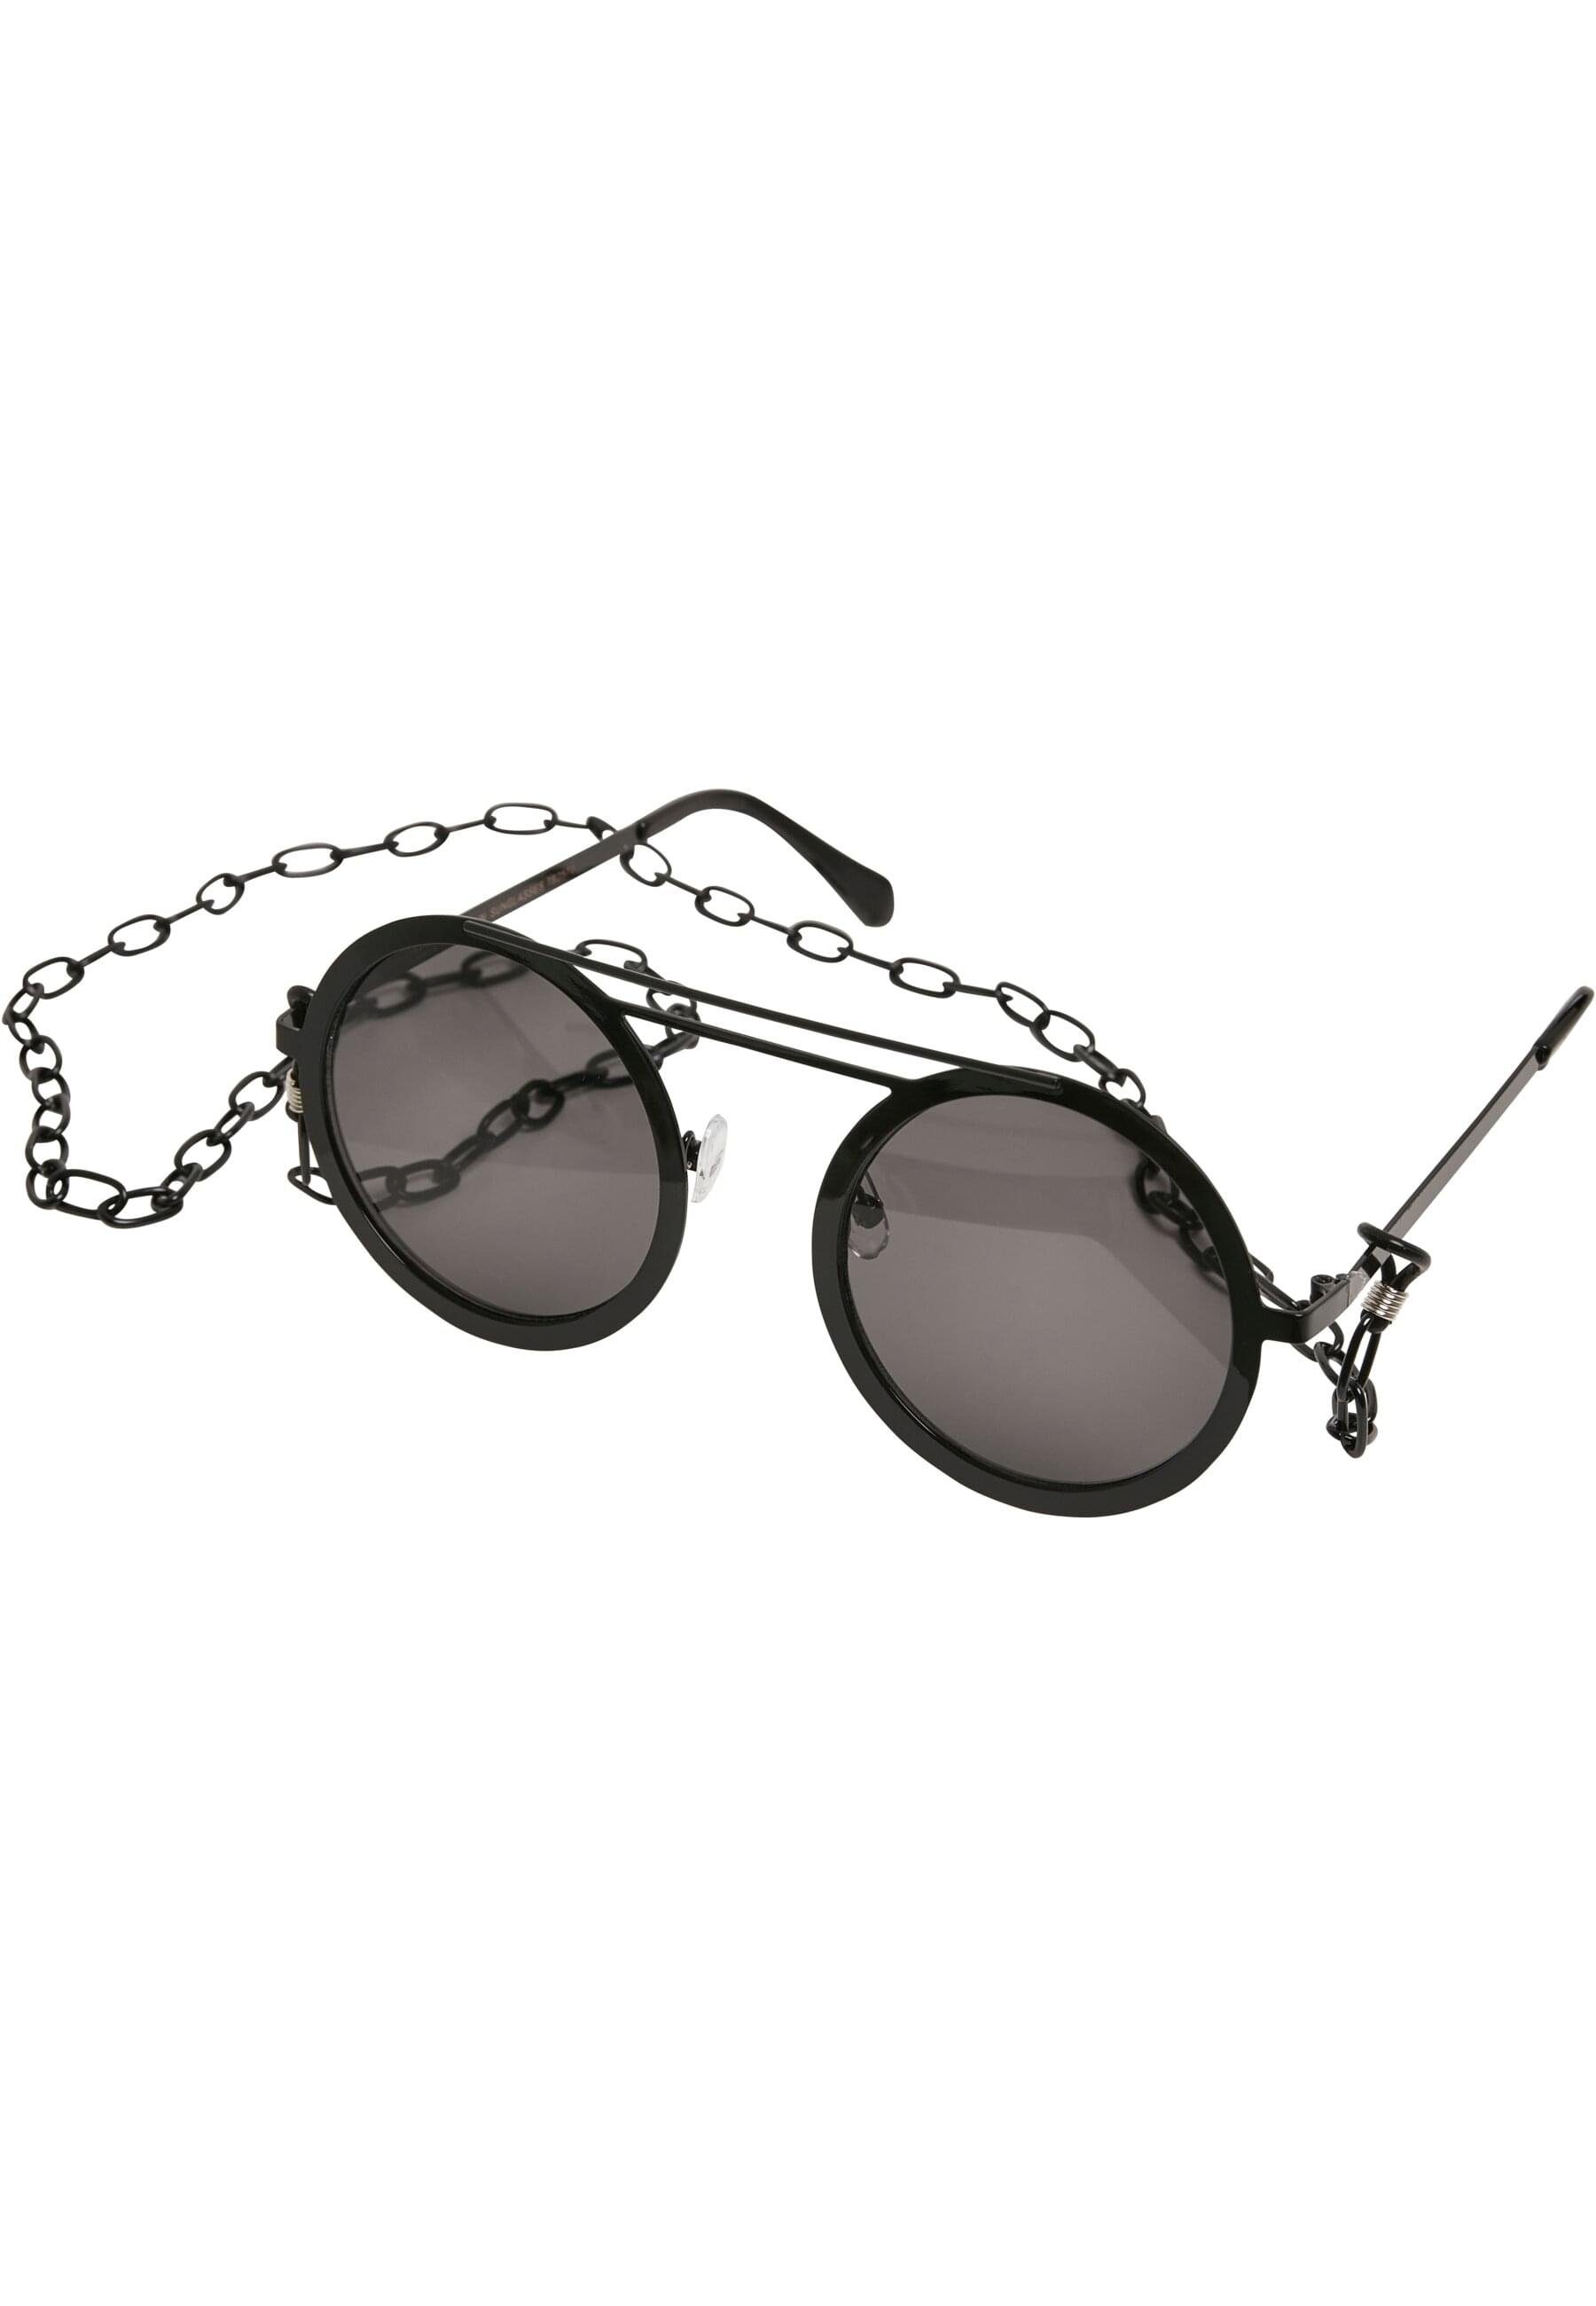 Chain URBAN Sonnenbrille black/black 104 Sunglasses CLASSICS Unisex